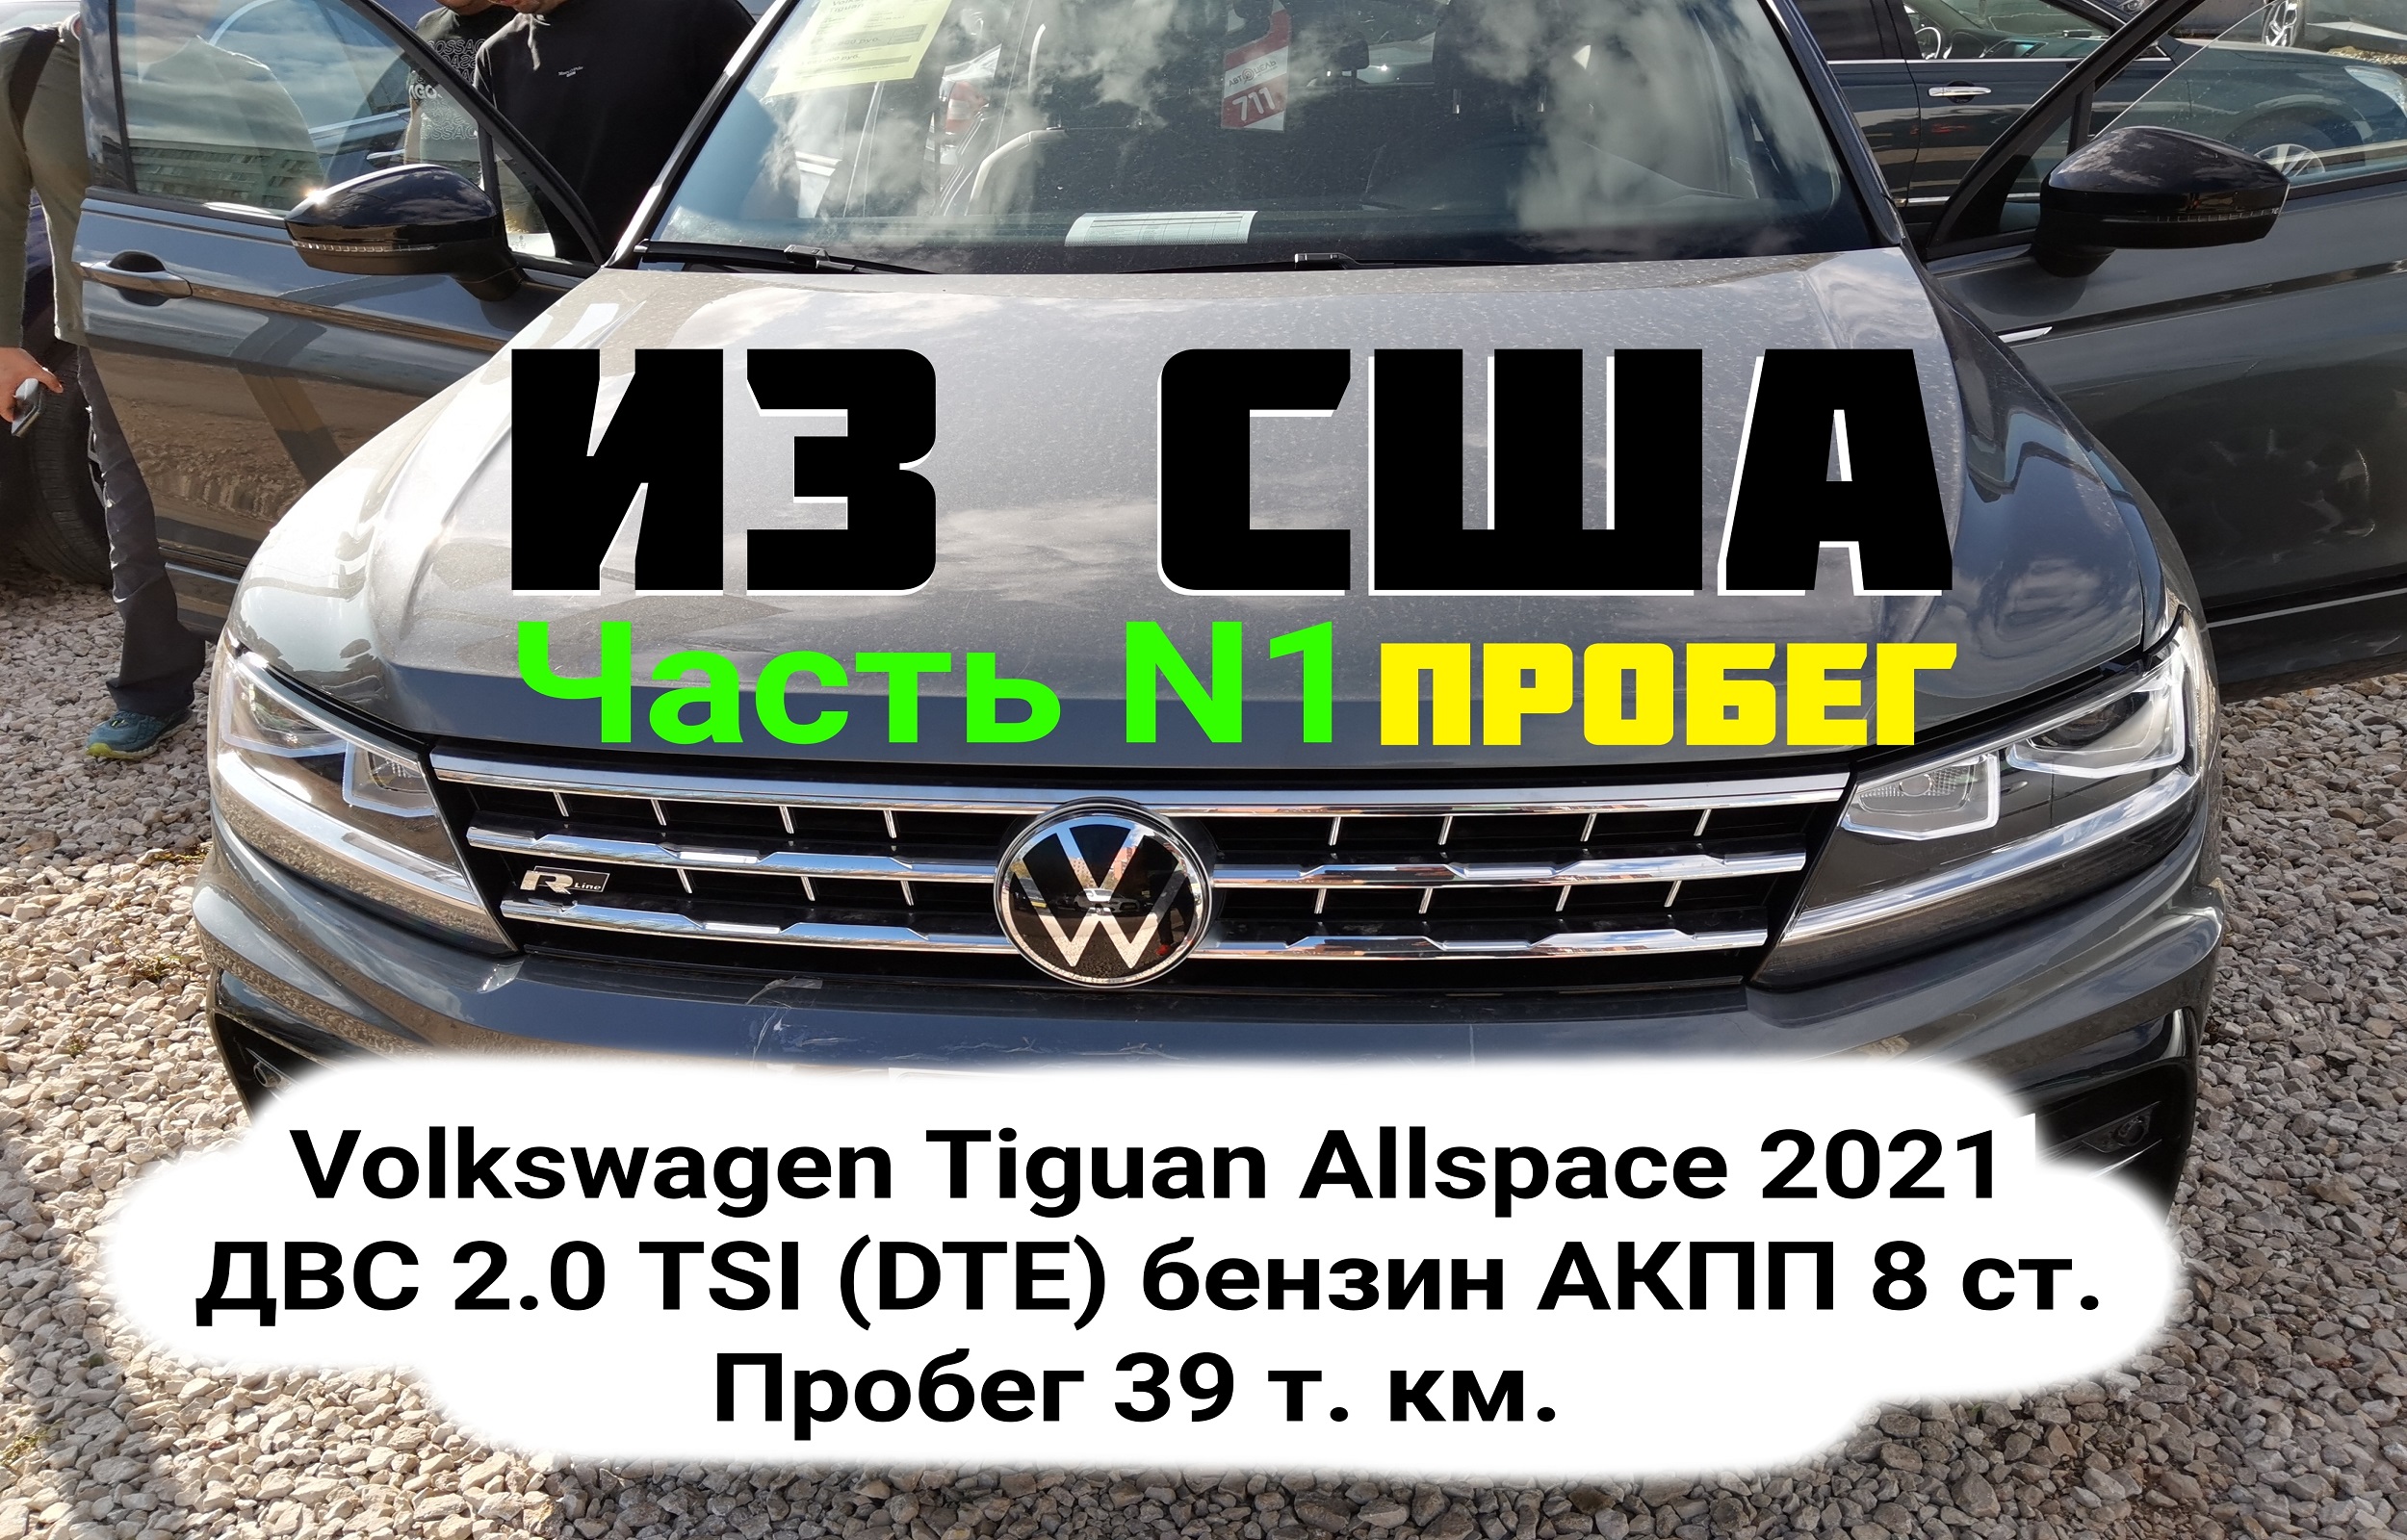 Volkswagen Tiguan Allspace 2021 Из США (аукцион)  Пробег: 39 т. км. (часы работы ДВС ~600)